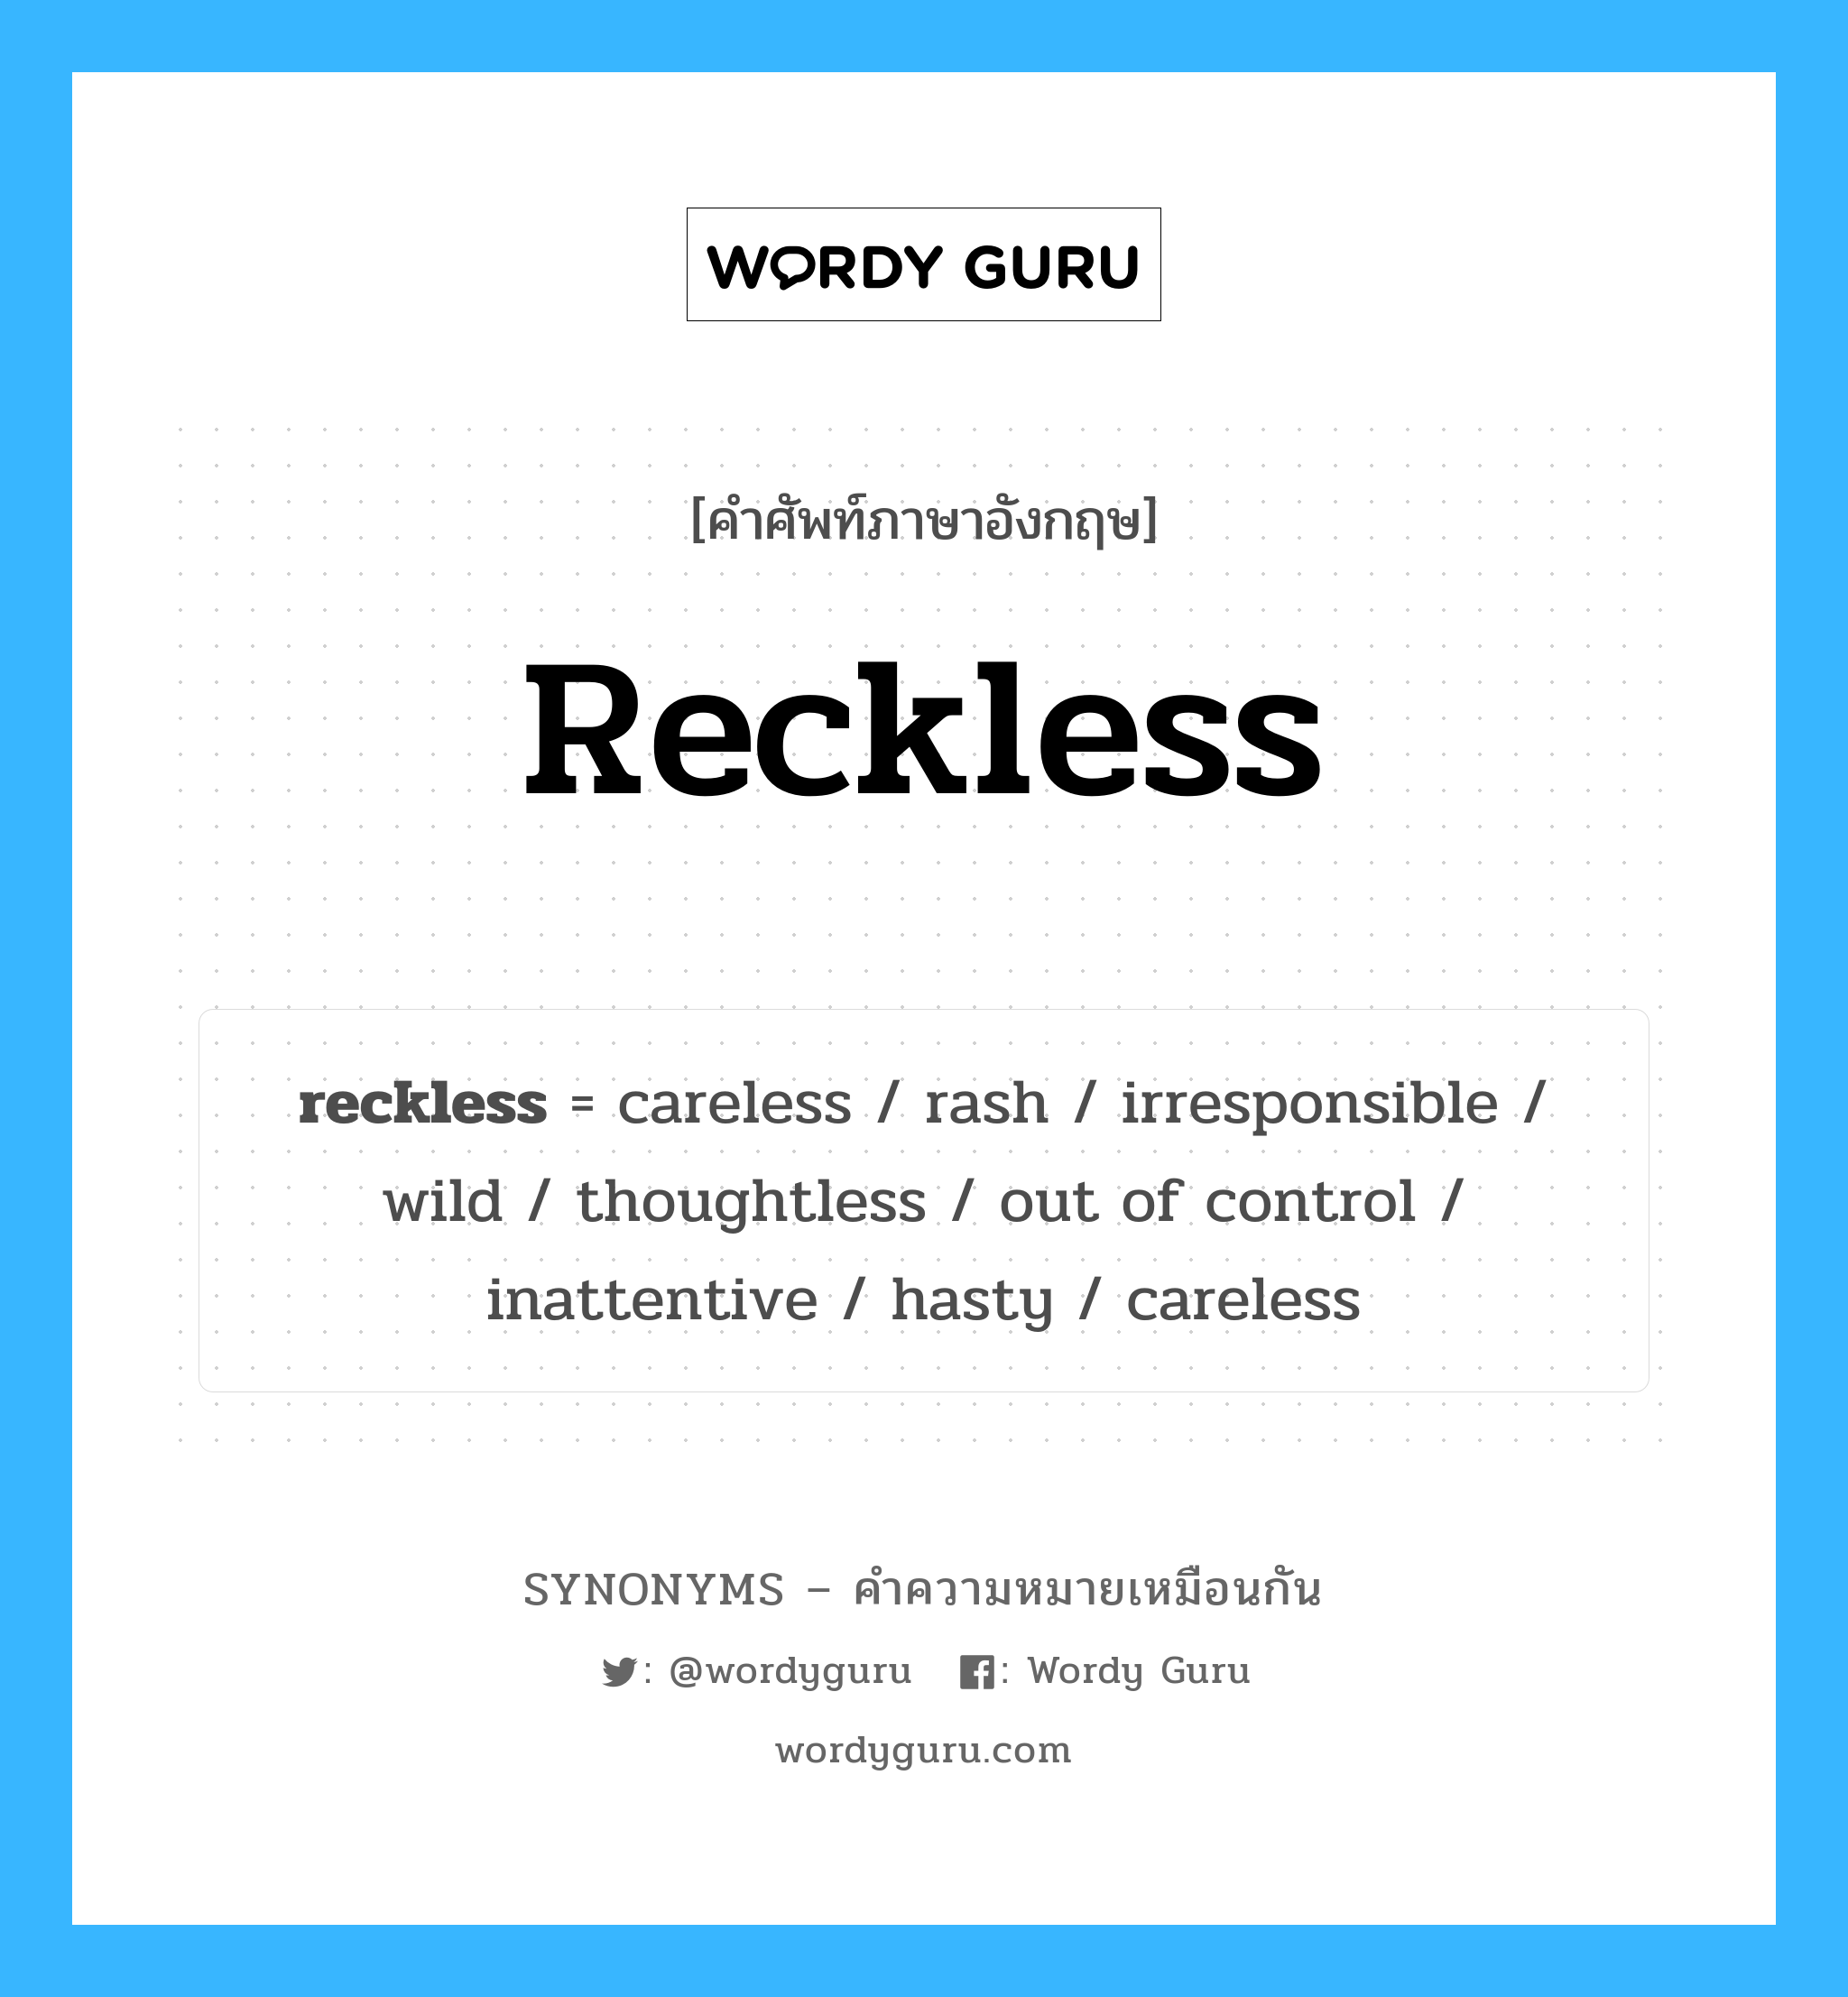 thoughtless เป็นหนึ่งใน reckless และมีคำอื่น ๆ อีกดังนี้, คำศัพท์ภาษาอังกฤษ thoughtless ความหมายคล้ายกันกับ reckless แปลว่า หยุดคิด หมวด reckless